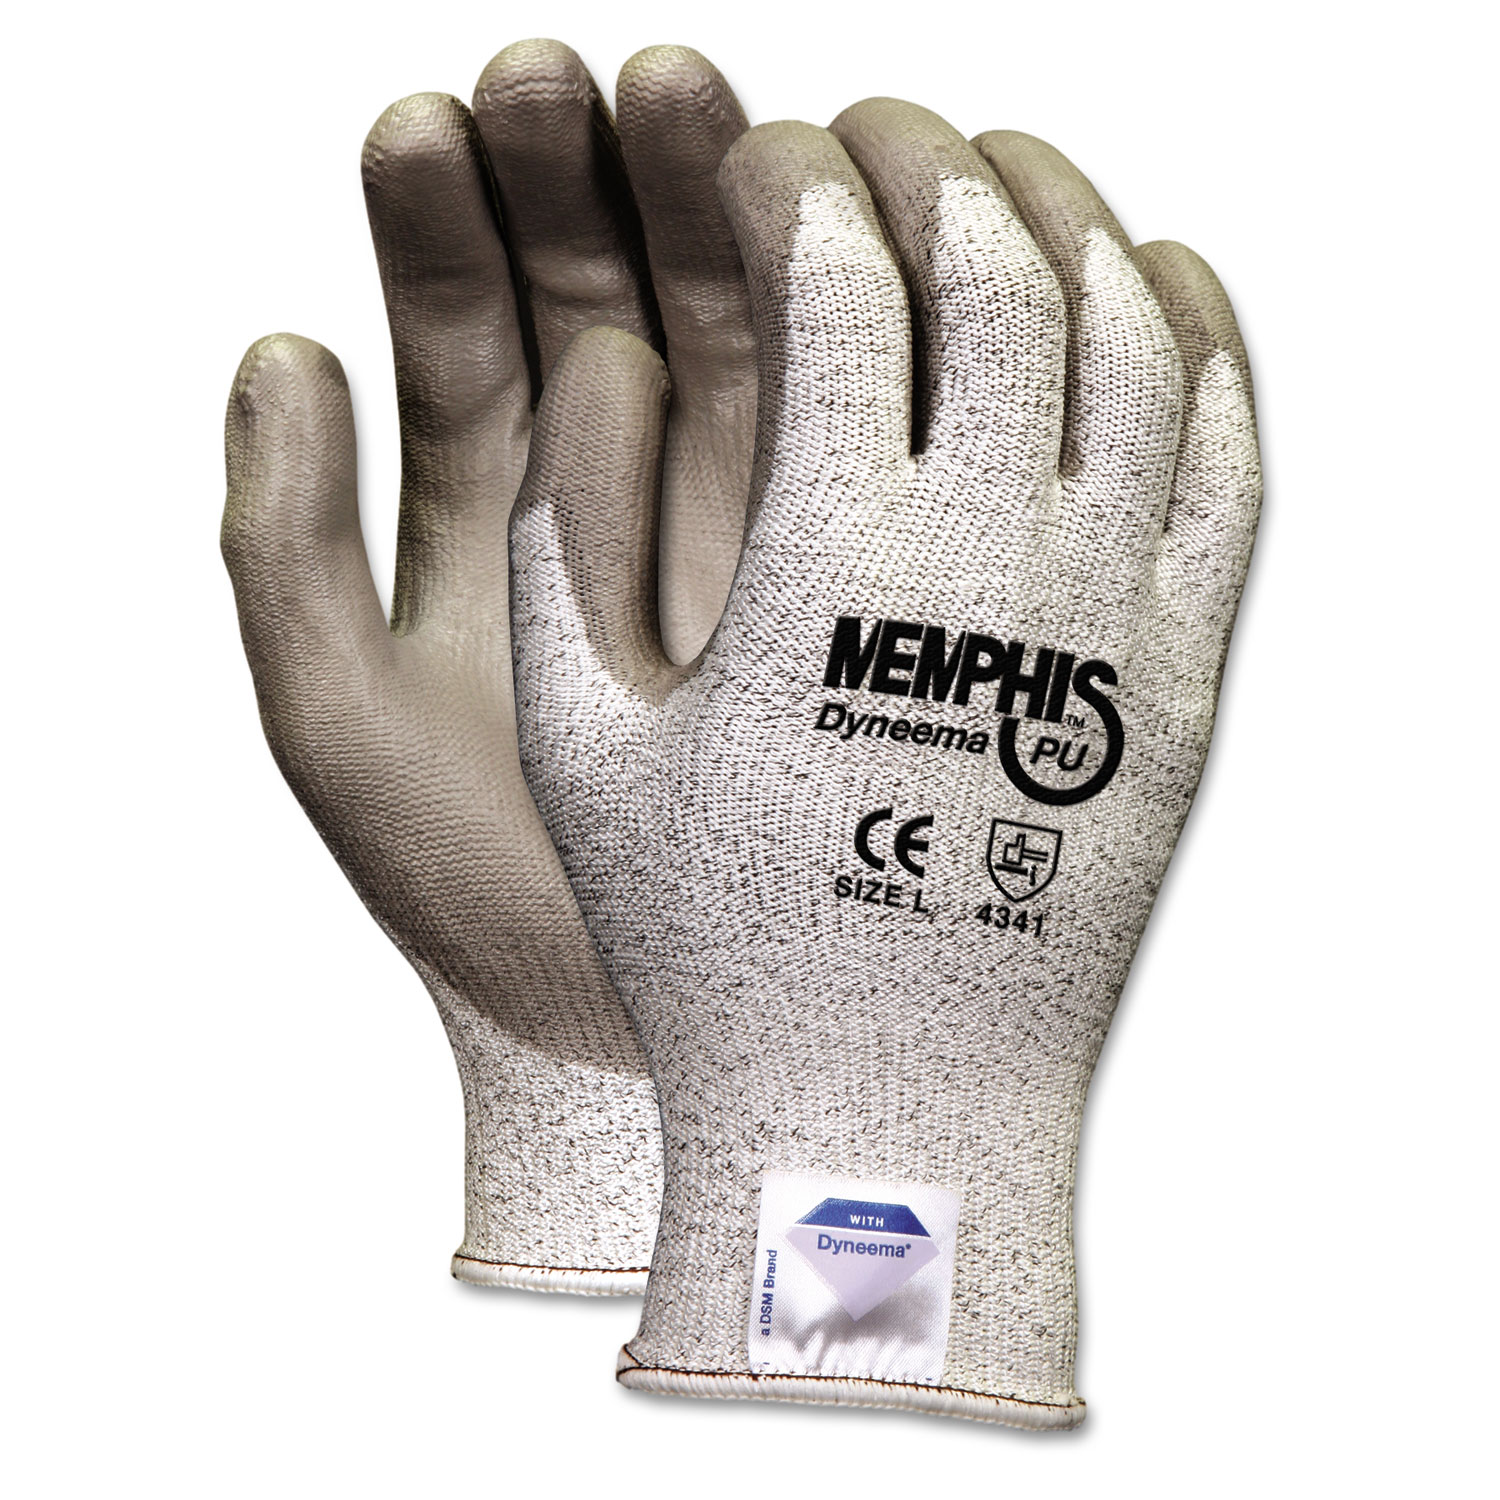  MCR Safety 9672XL Memphis Dyneema Polyurethane Gloves, X-Large, White/Gray, Pair (CRW9672XL) 